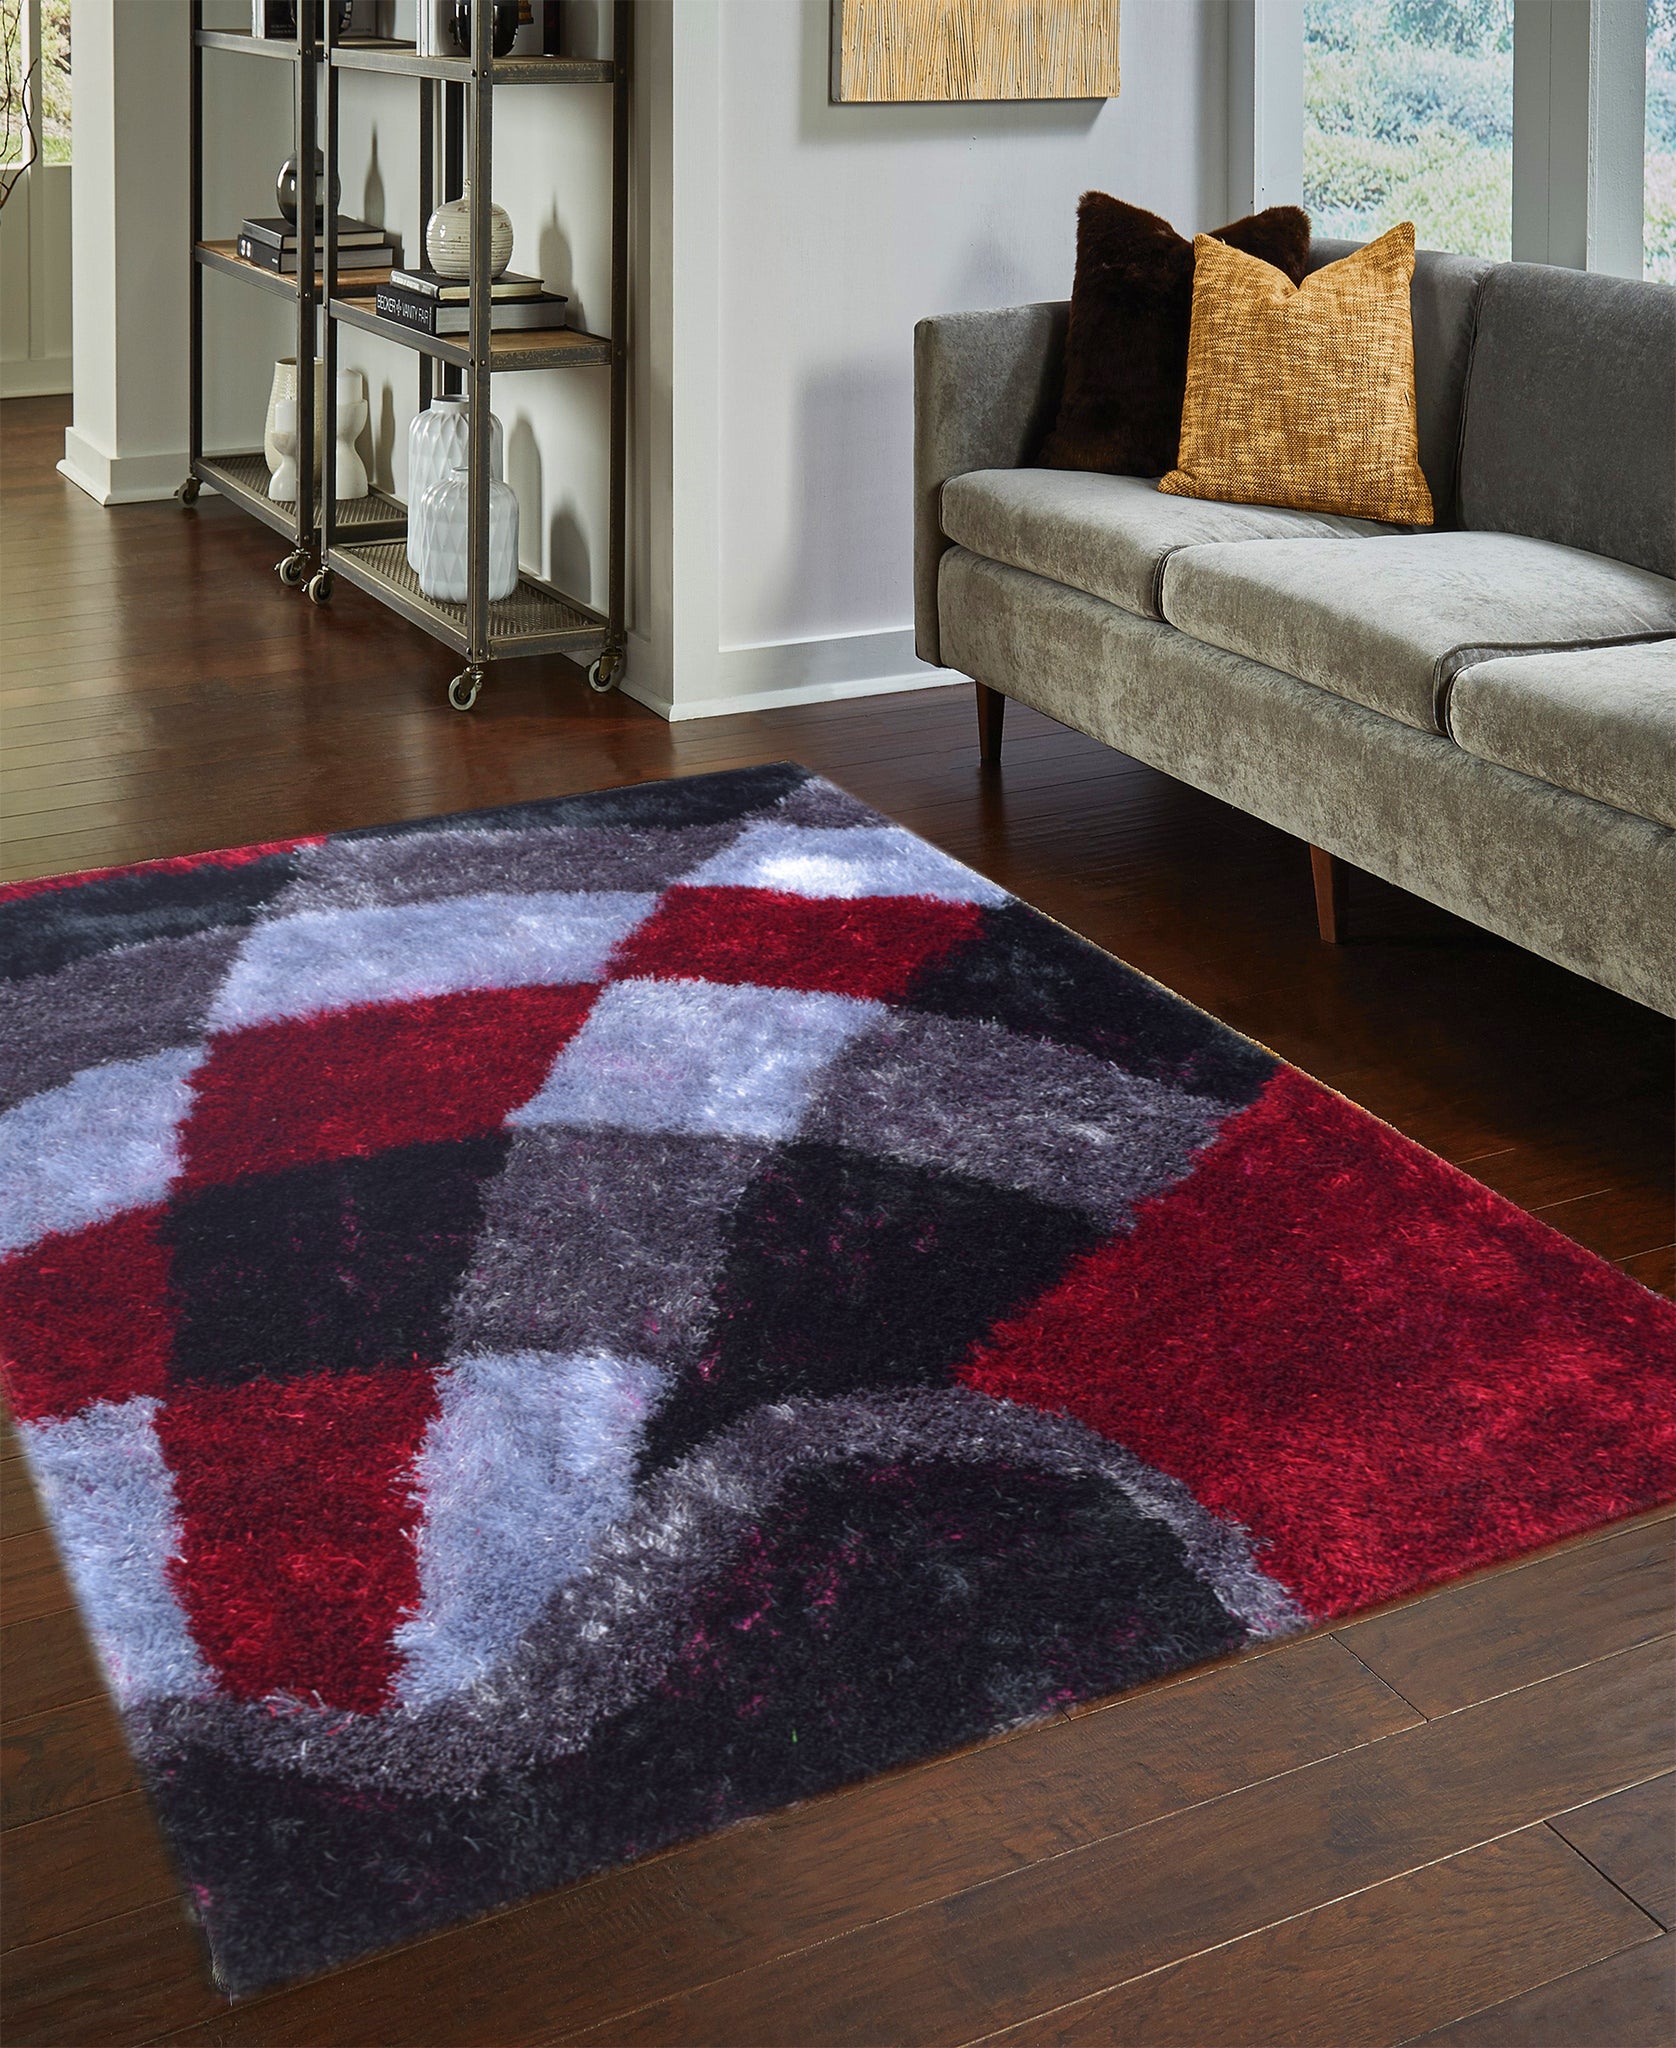 Shaggy Checkered Carpet 1200mm x 1600mm - Red, Grey & Black